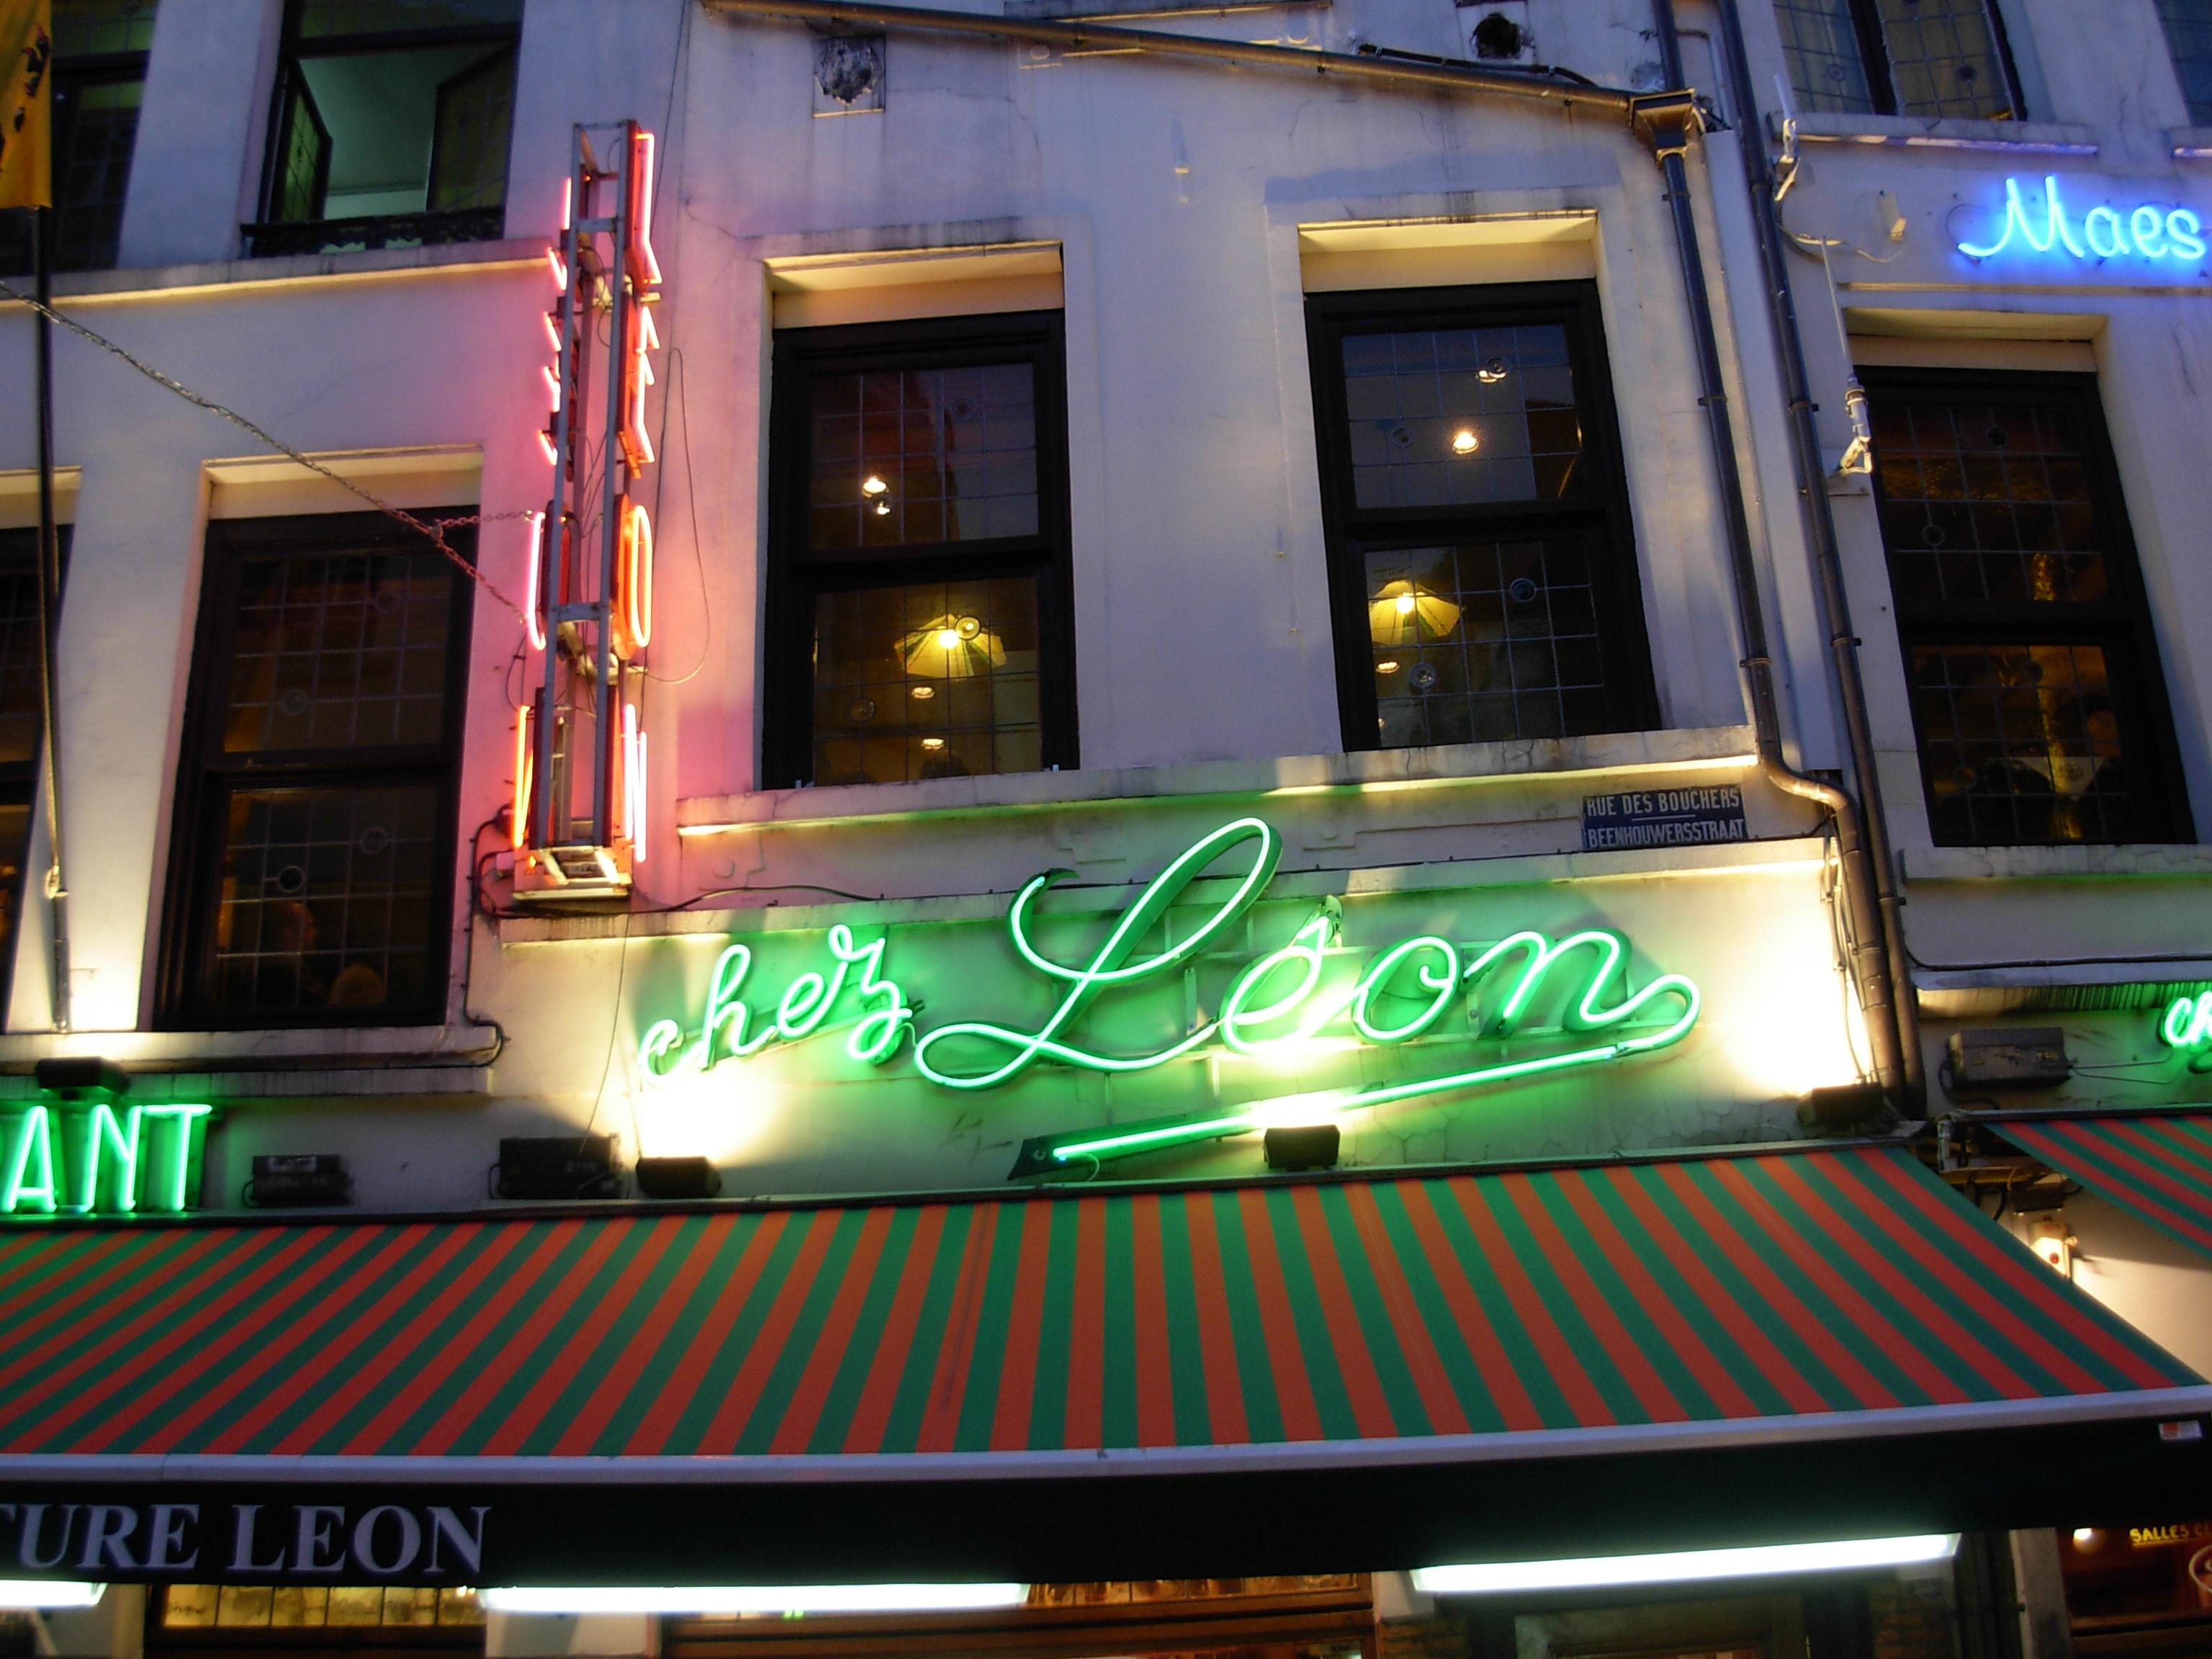 Cover image of this place Chez Léon